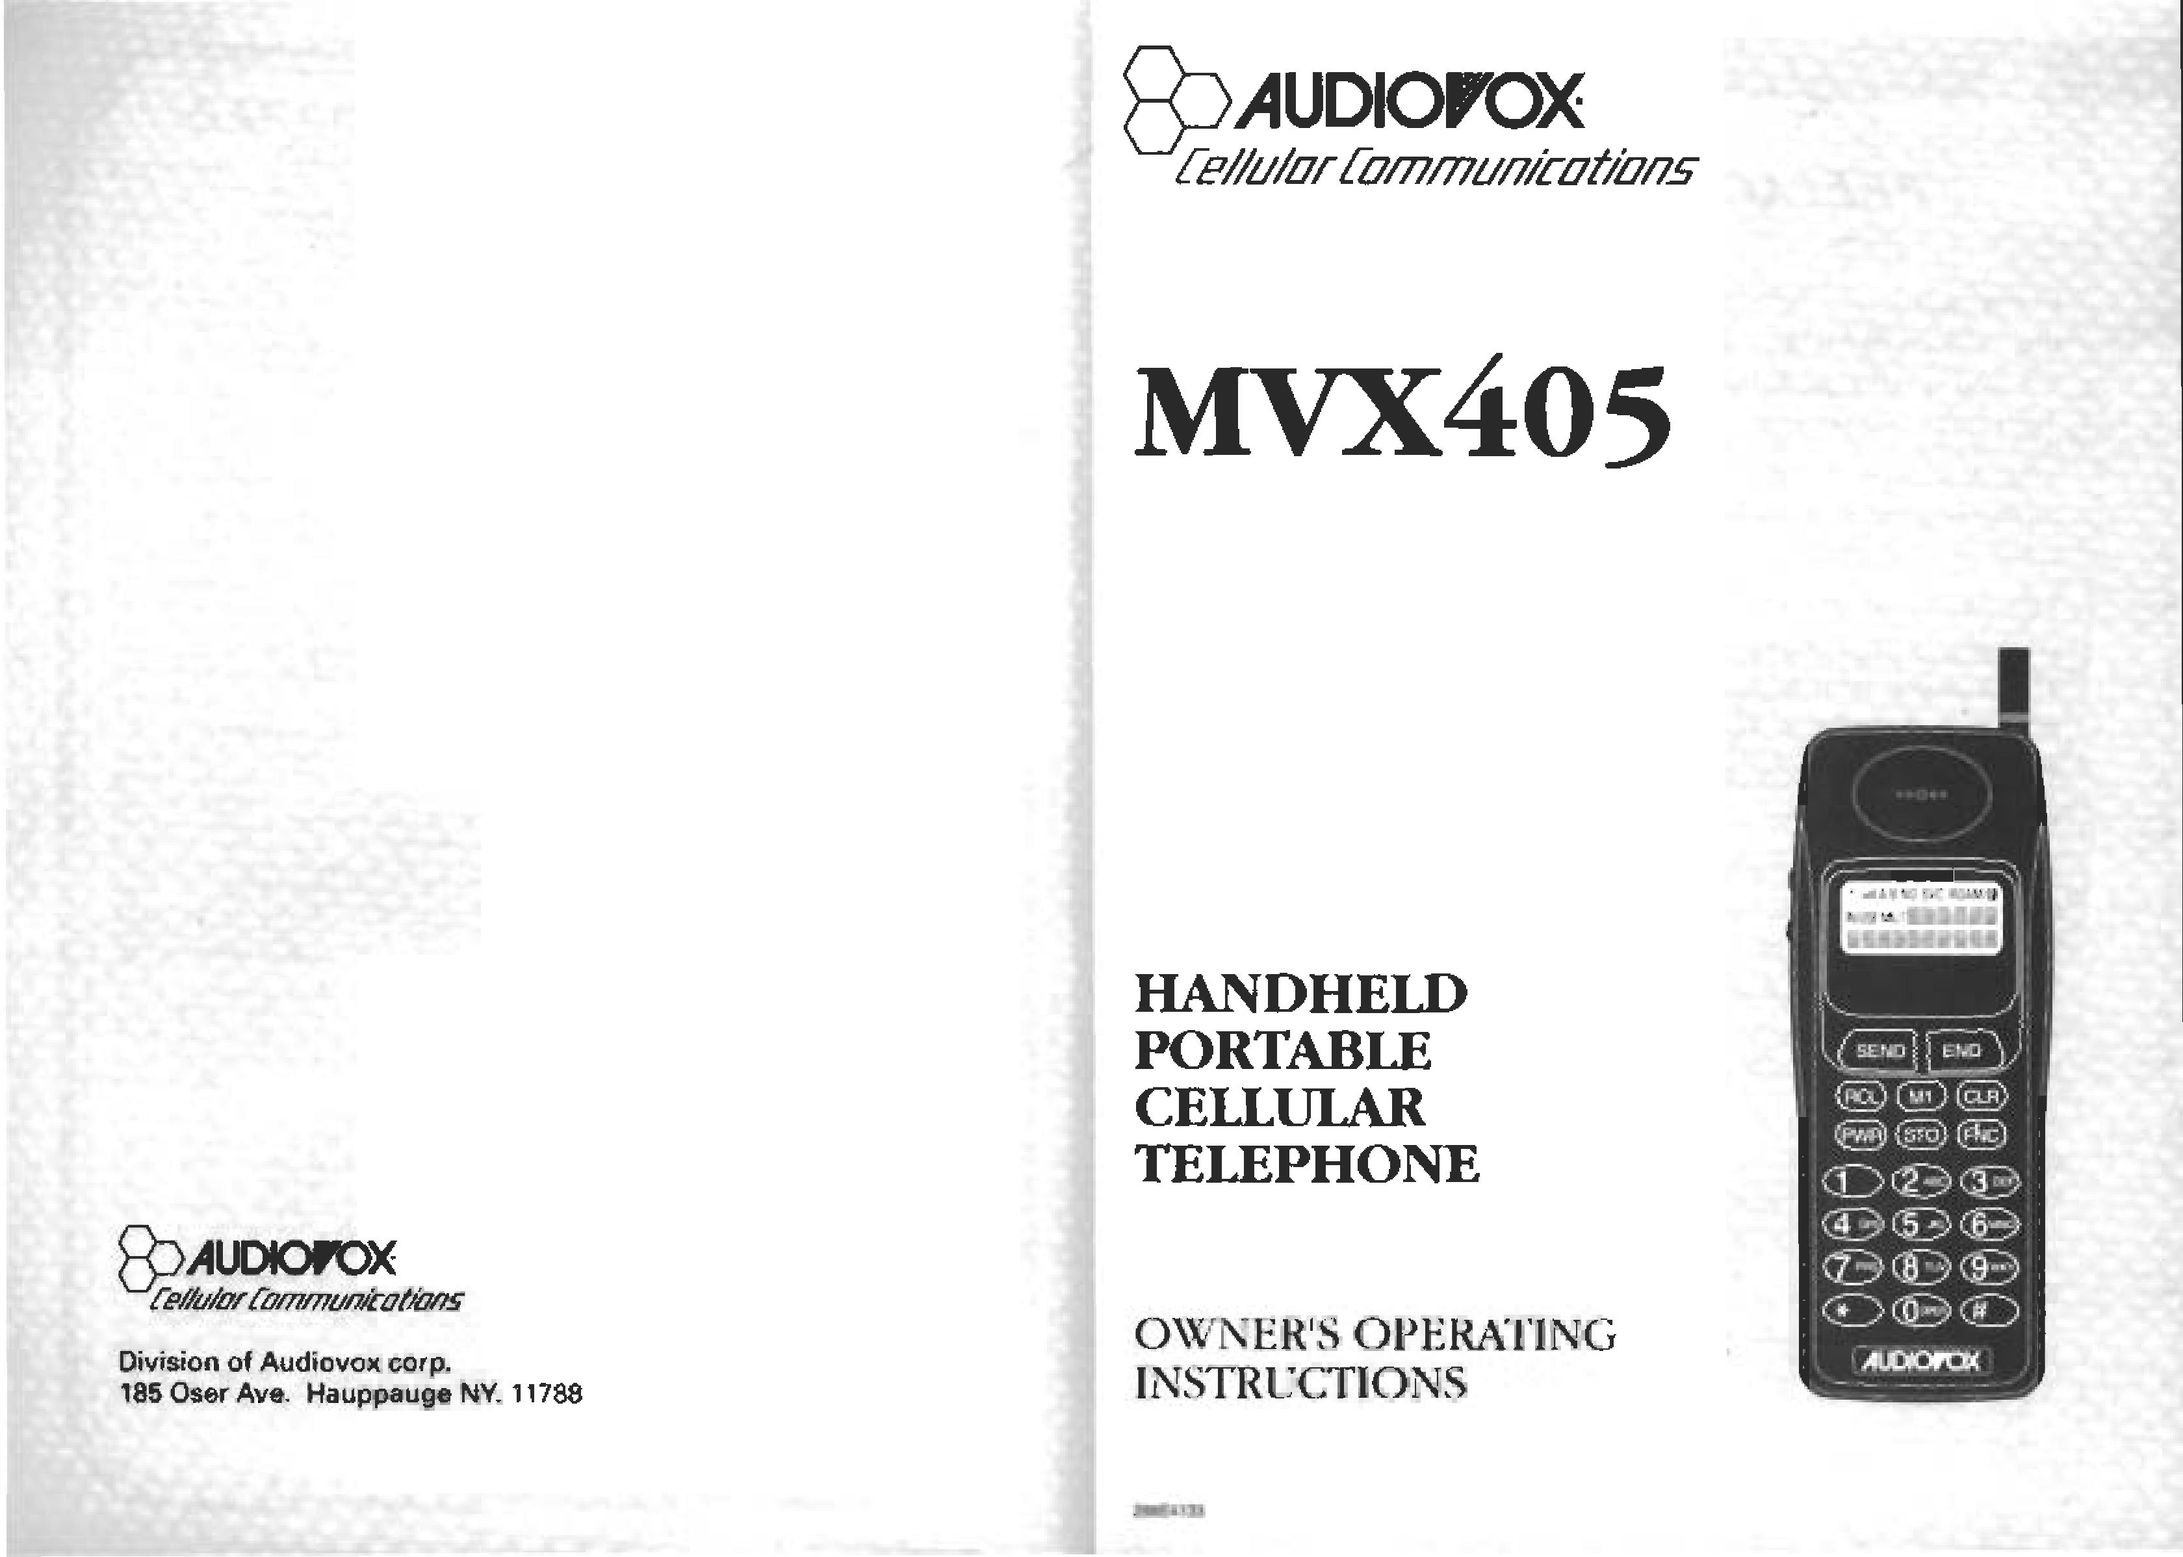 Audiovox MVX405 Cell Phone User Manual